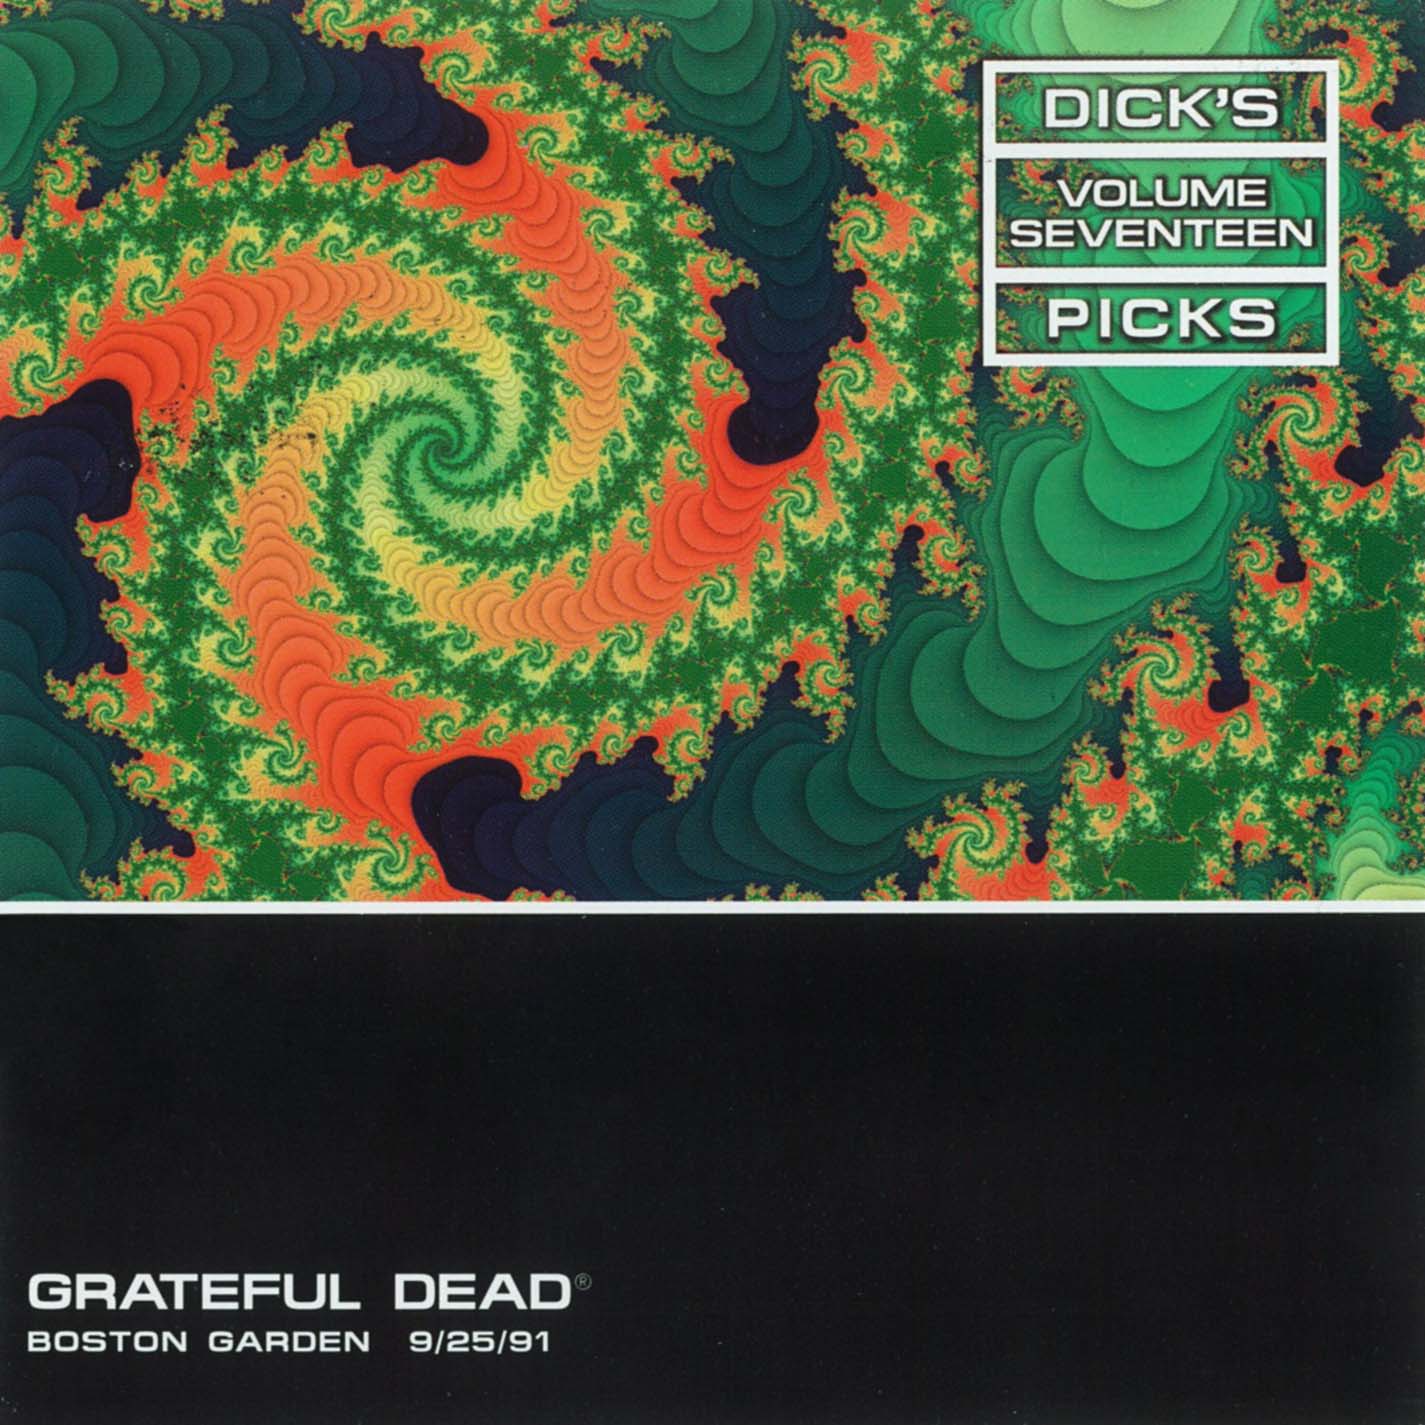 Grateful Dead Dick's Picks 17 album cover artwork